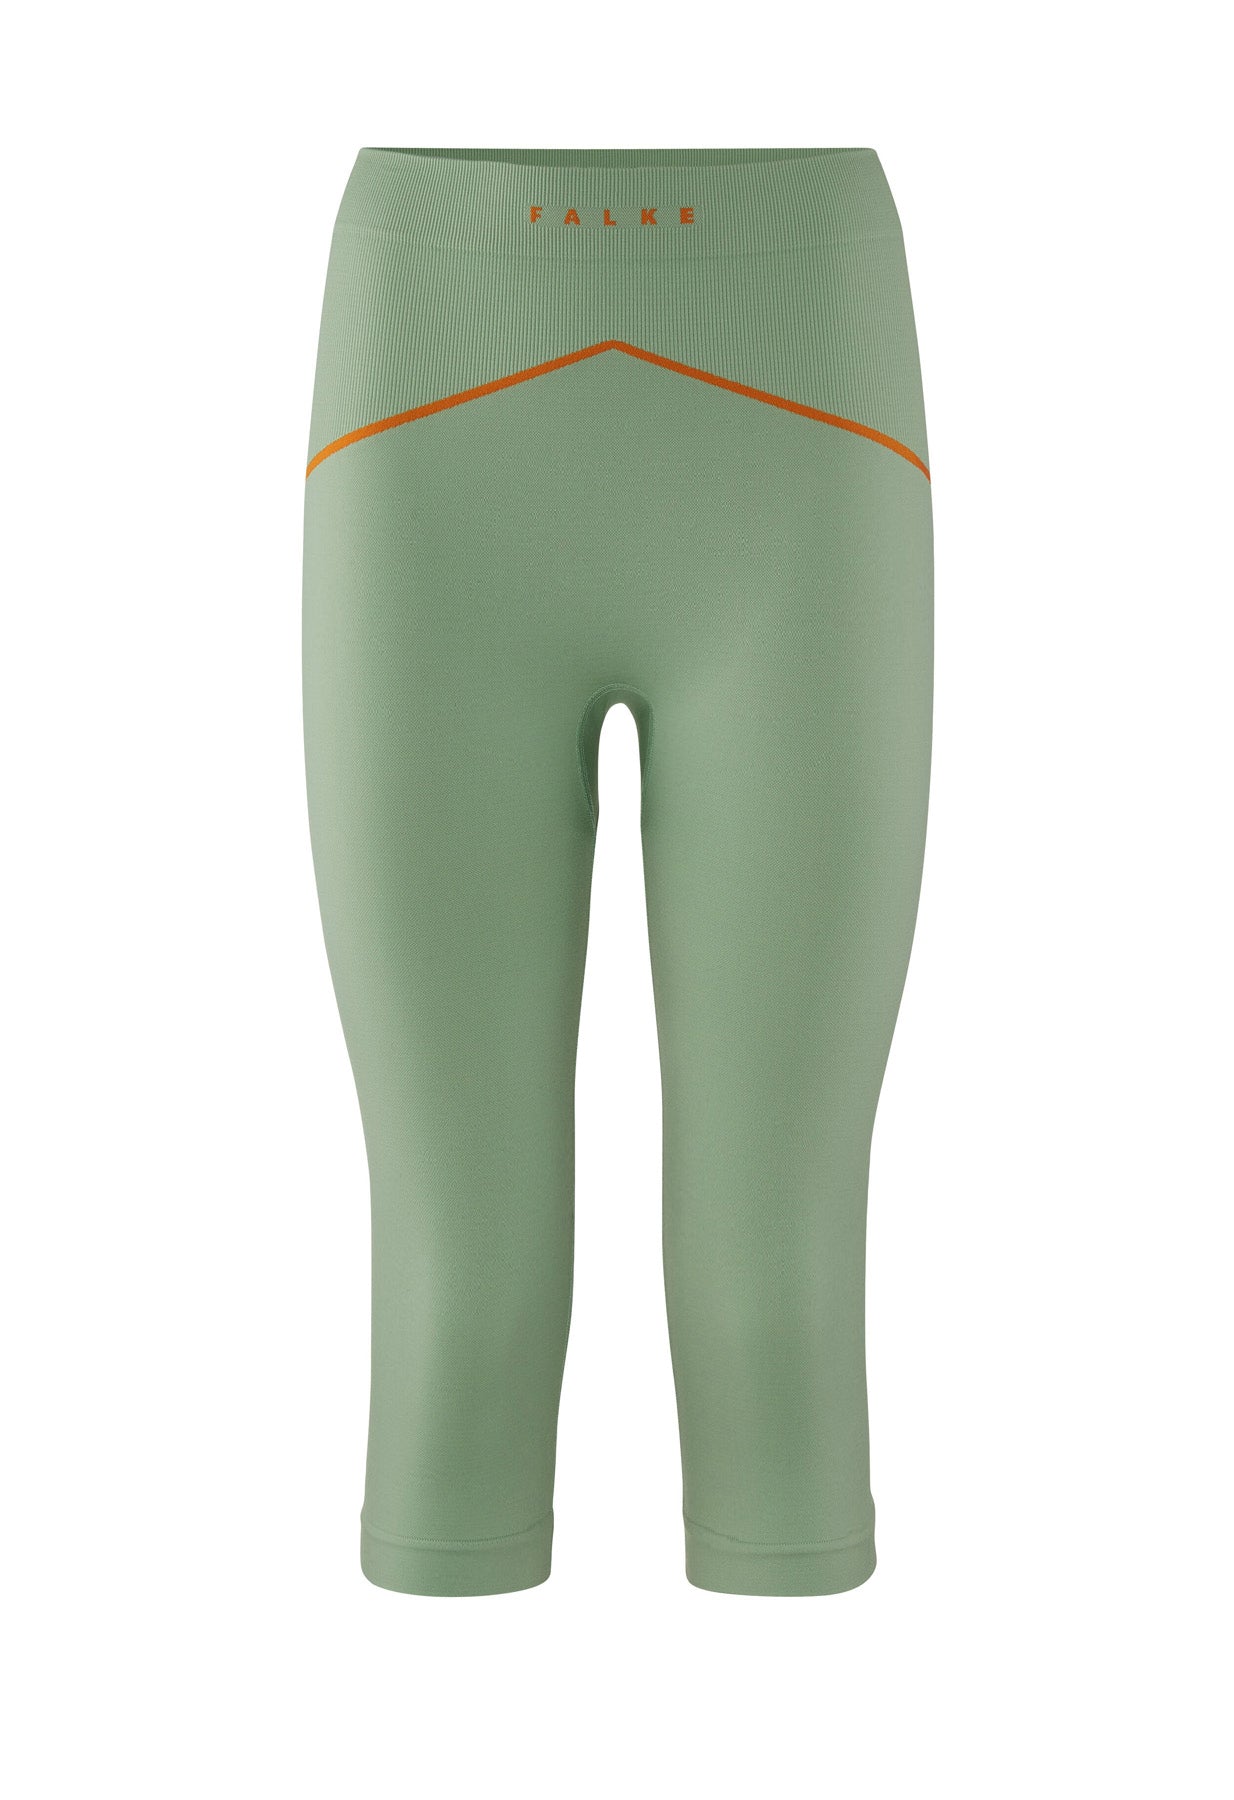 Falke 3/4 length thermal ski leggings